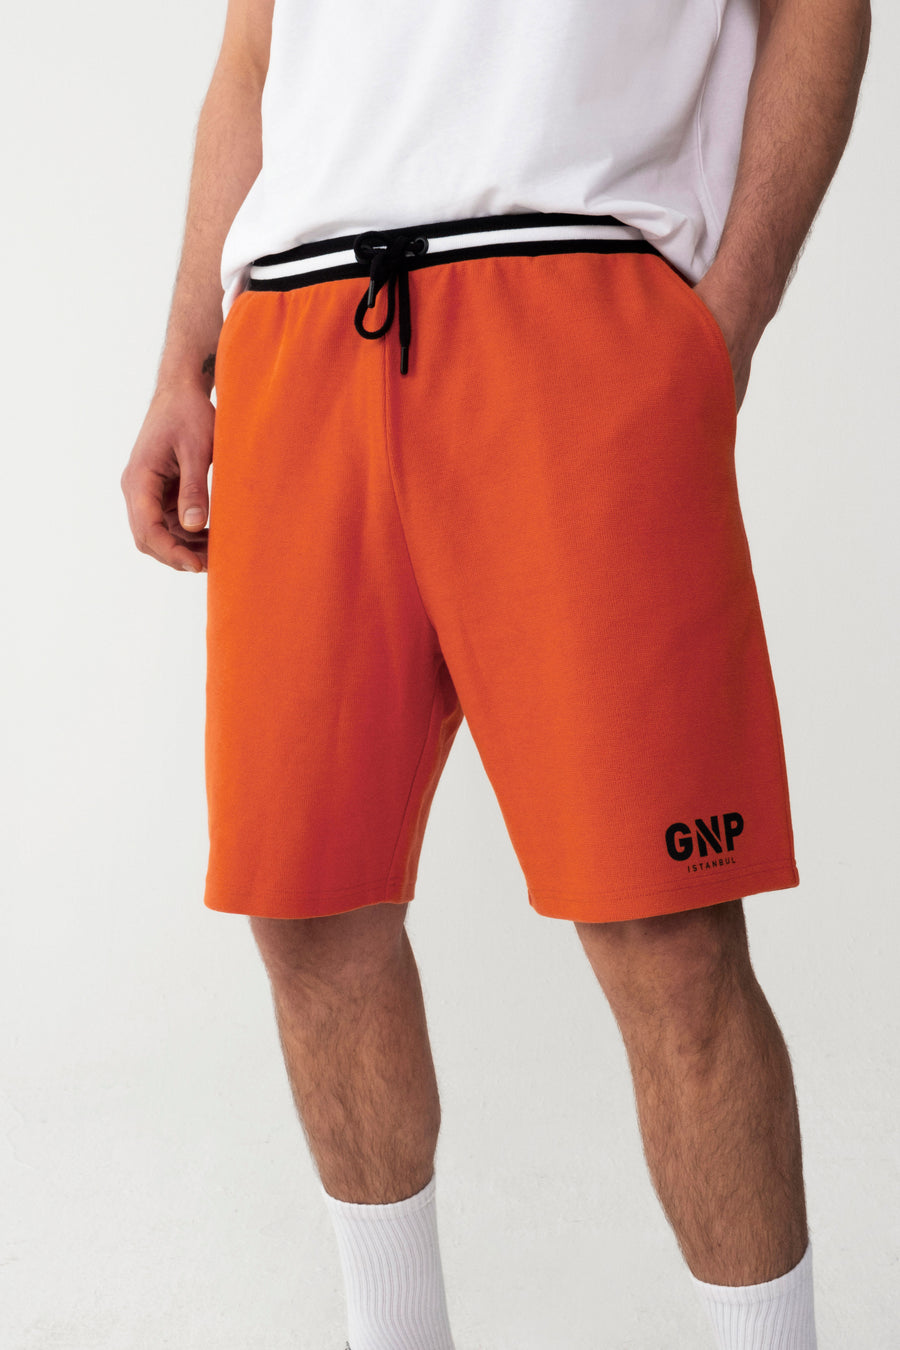 GNP Logo Orange Shorts